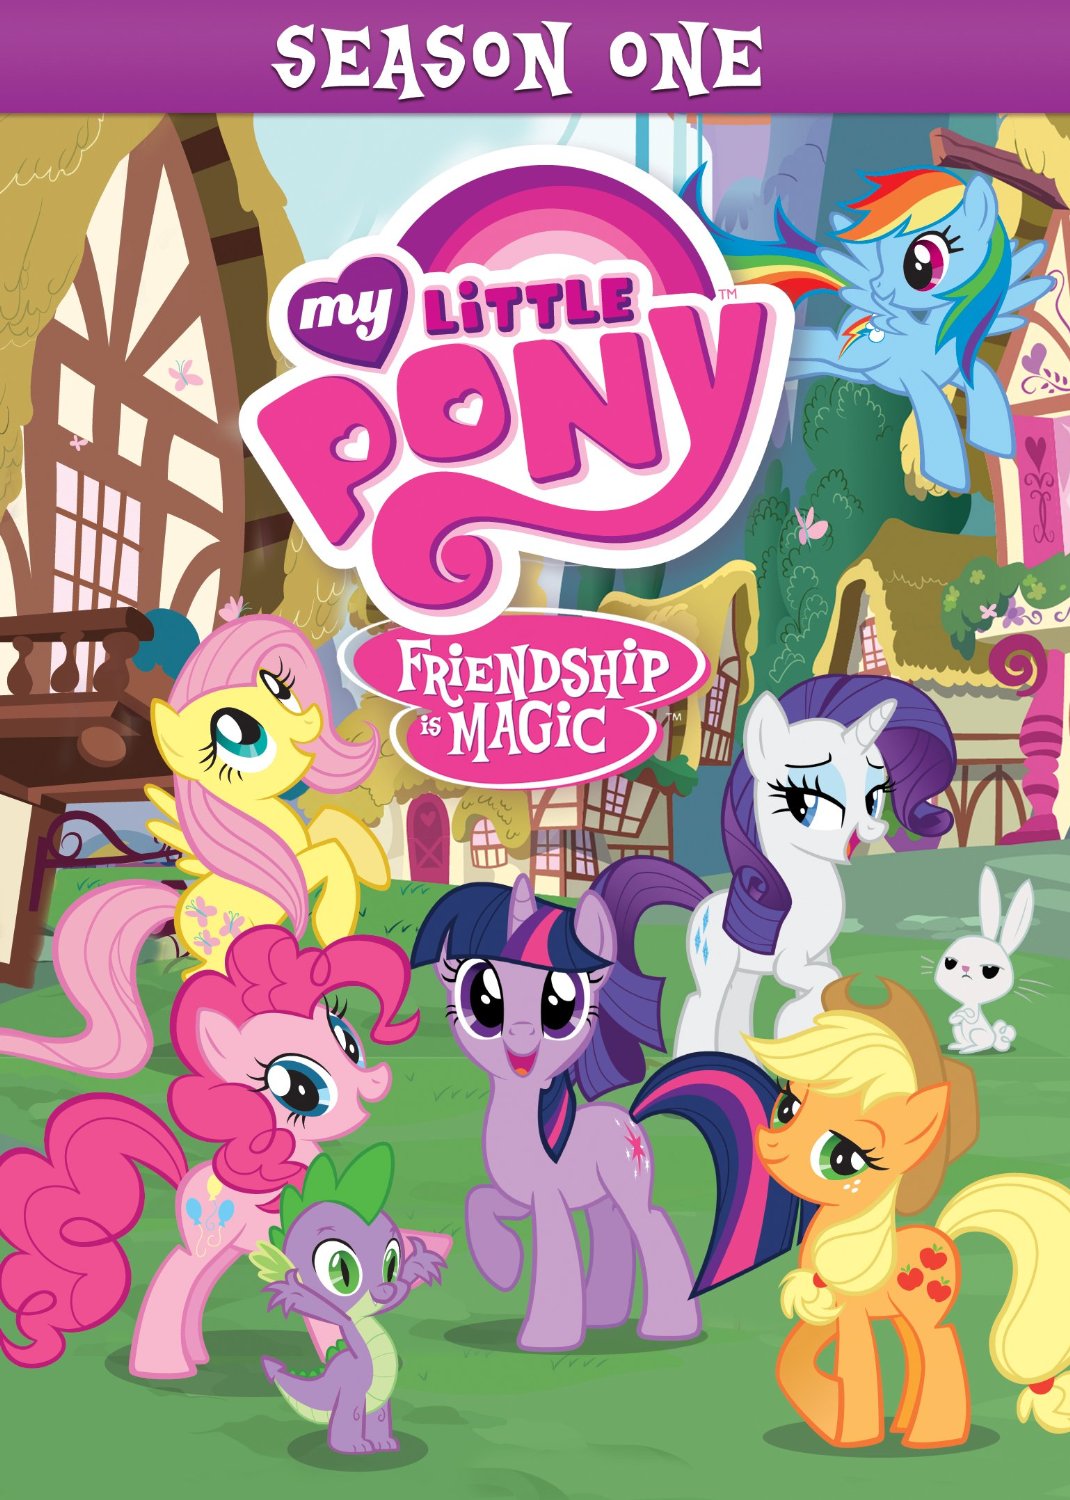 My Little Pony Friendship is Magic SS1 - My Little Pony: Friendship is Magic Season 1